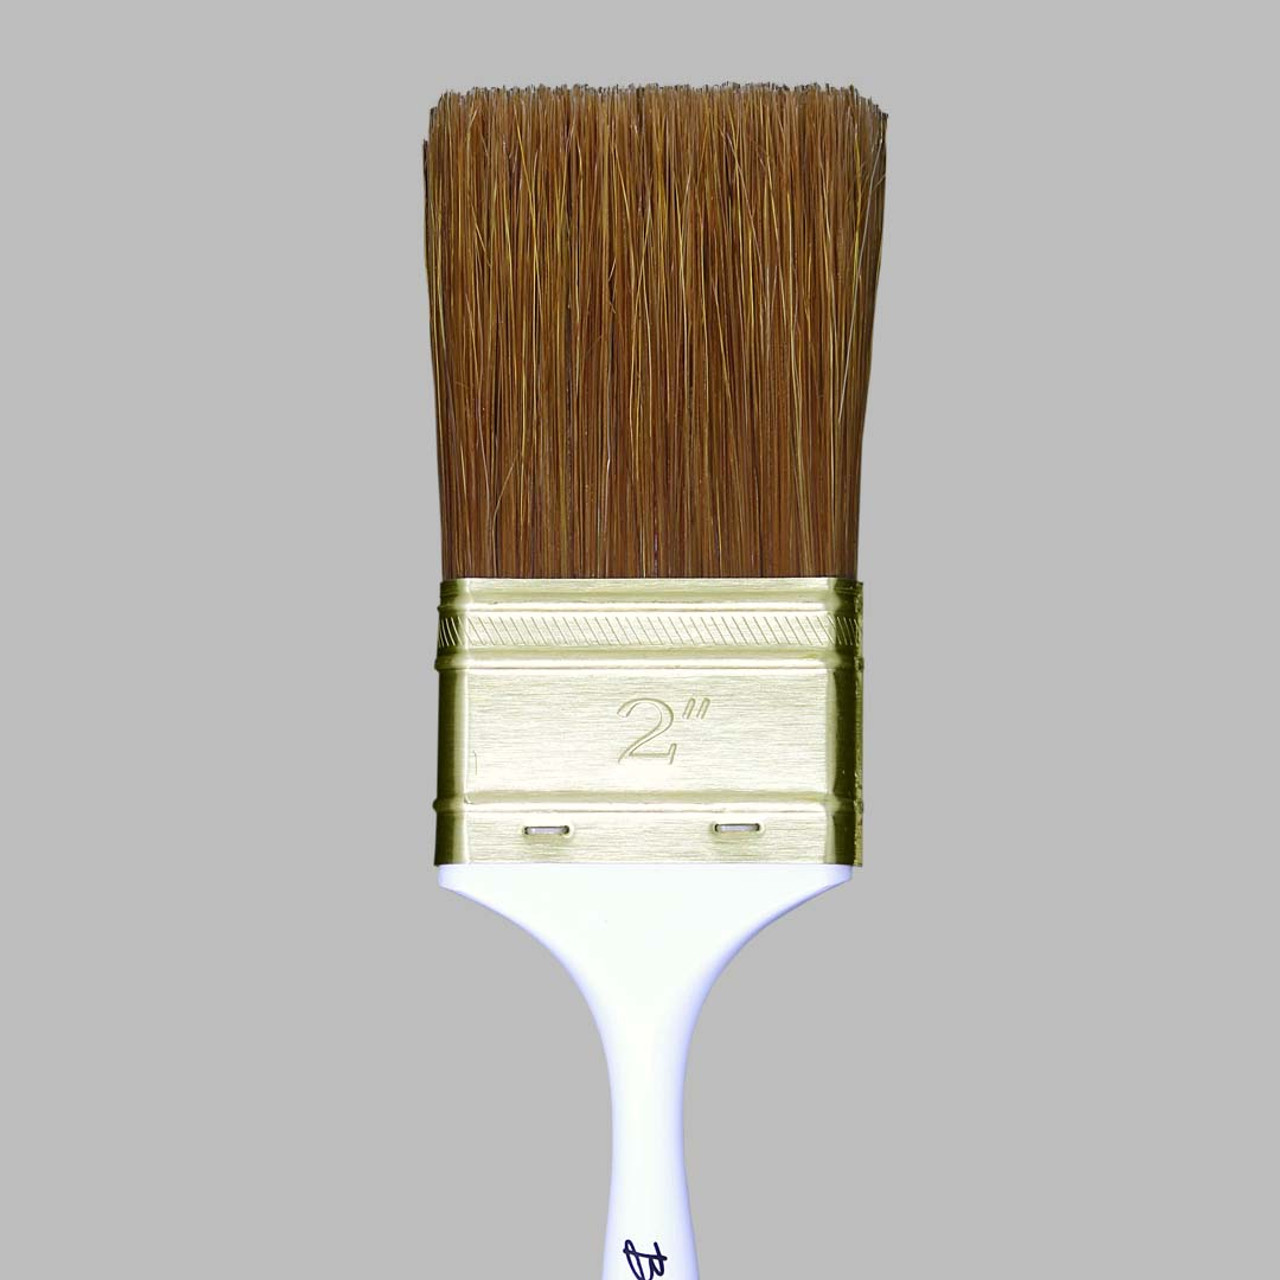 2 inch Background Brush